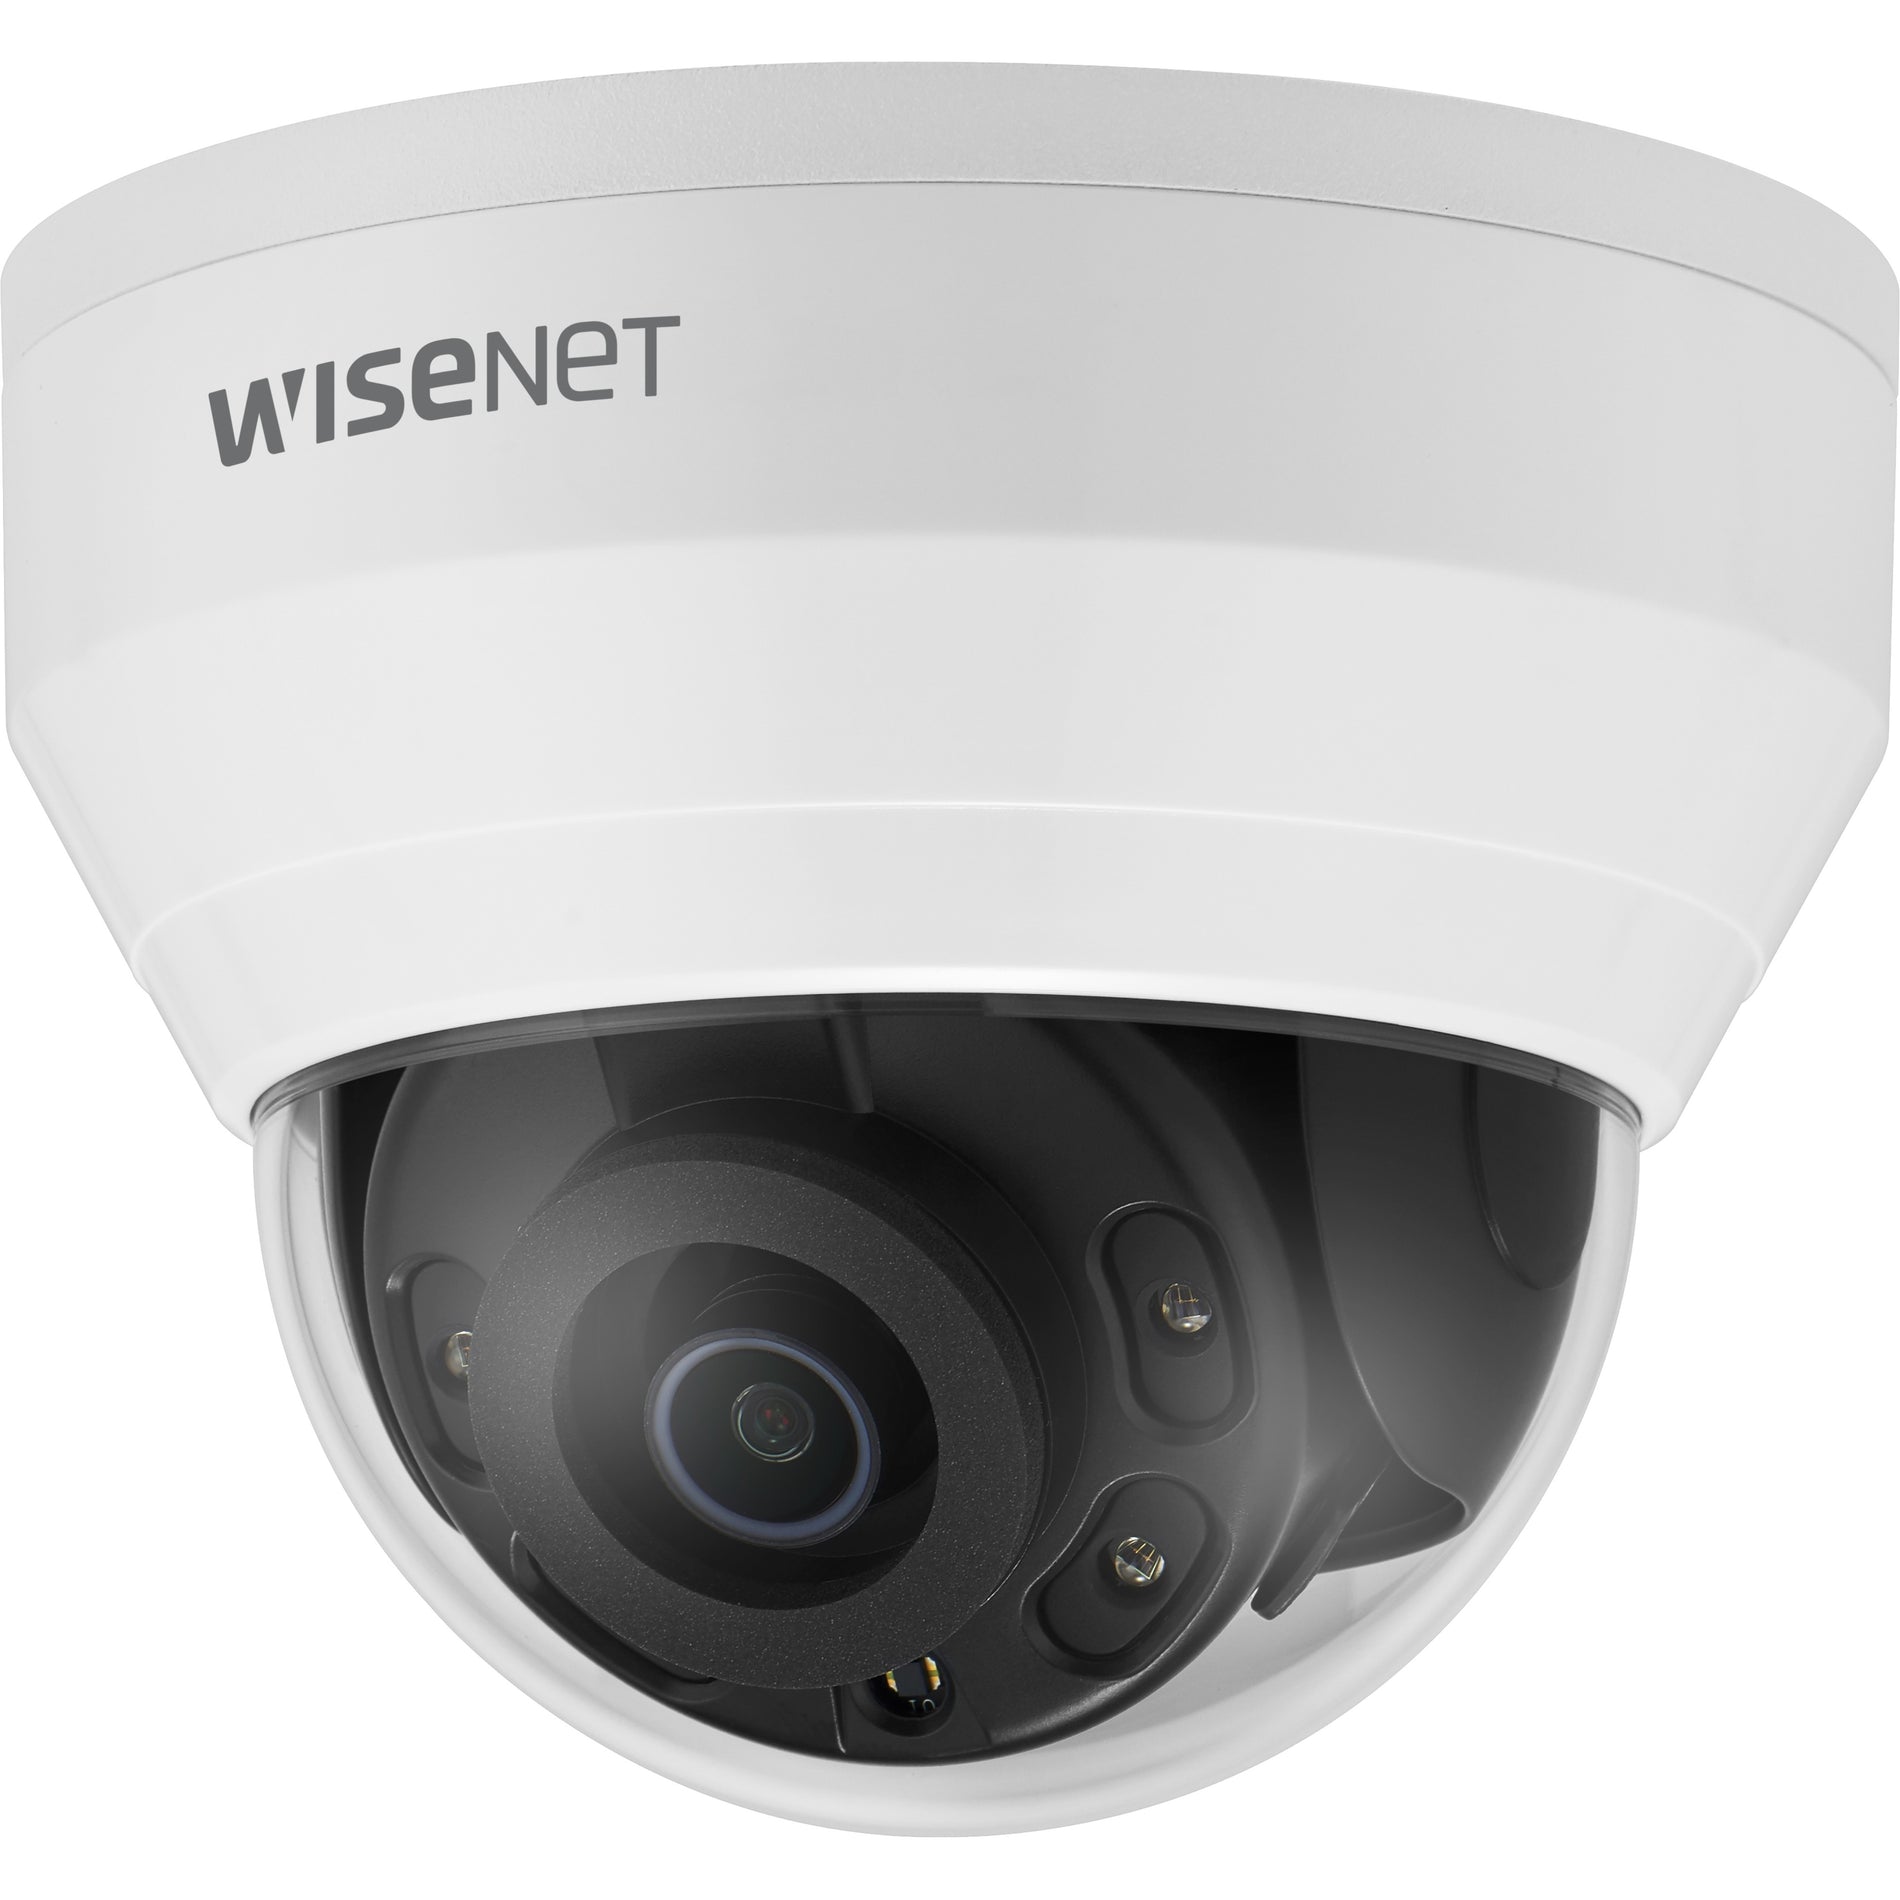 Wisenet QND-8010R 5 MP Network IR Dome Camera, Color, Dome